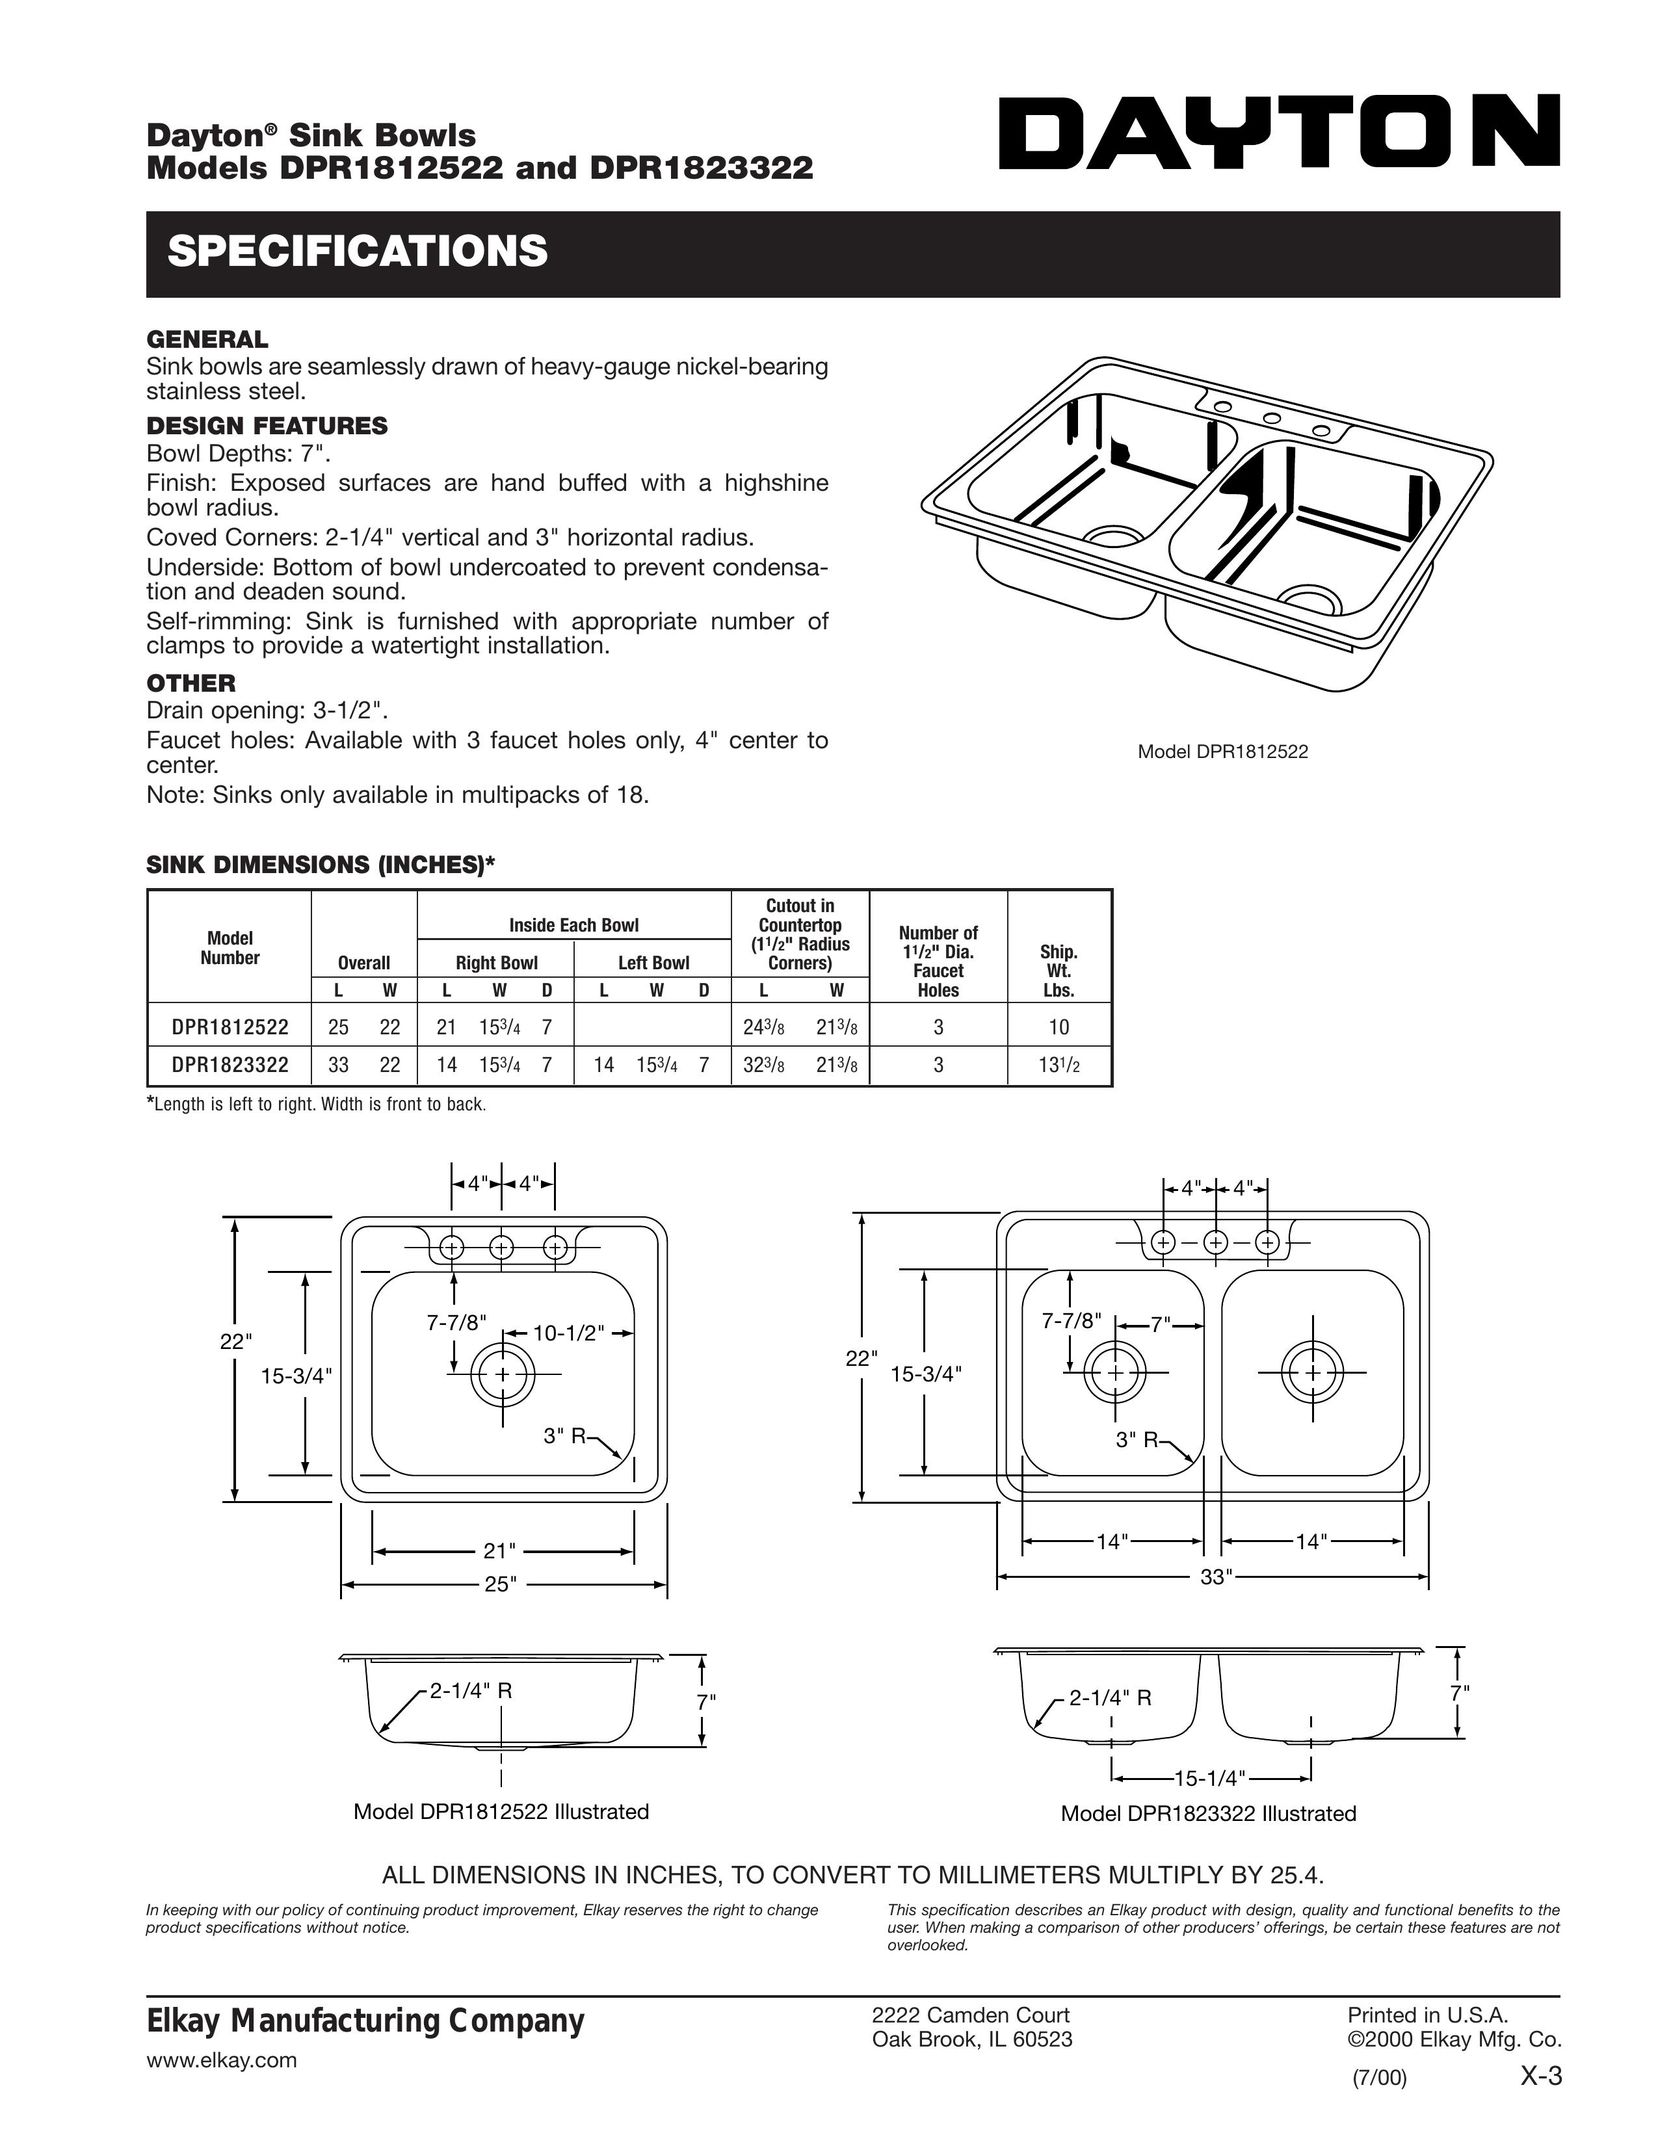 Dayton DPR1823322 Indoor Furnishings User Manual